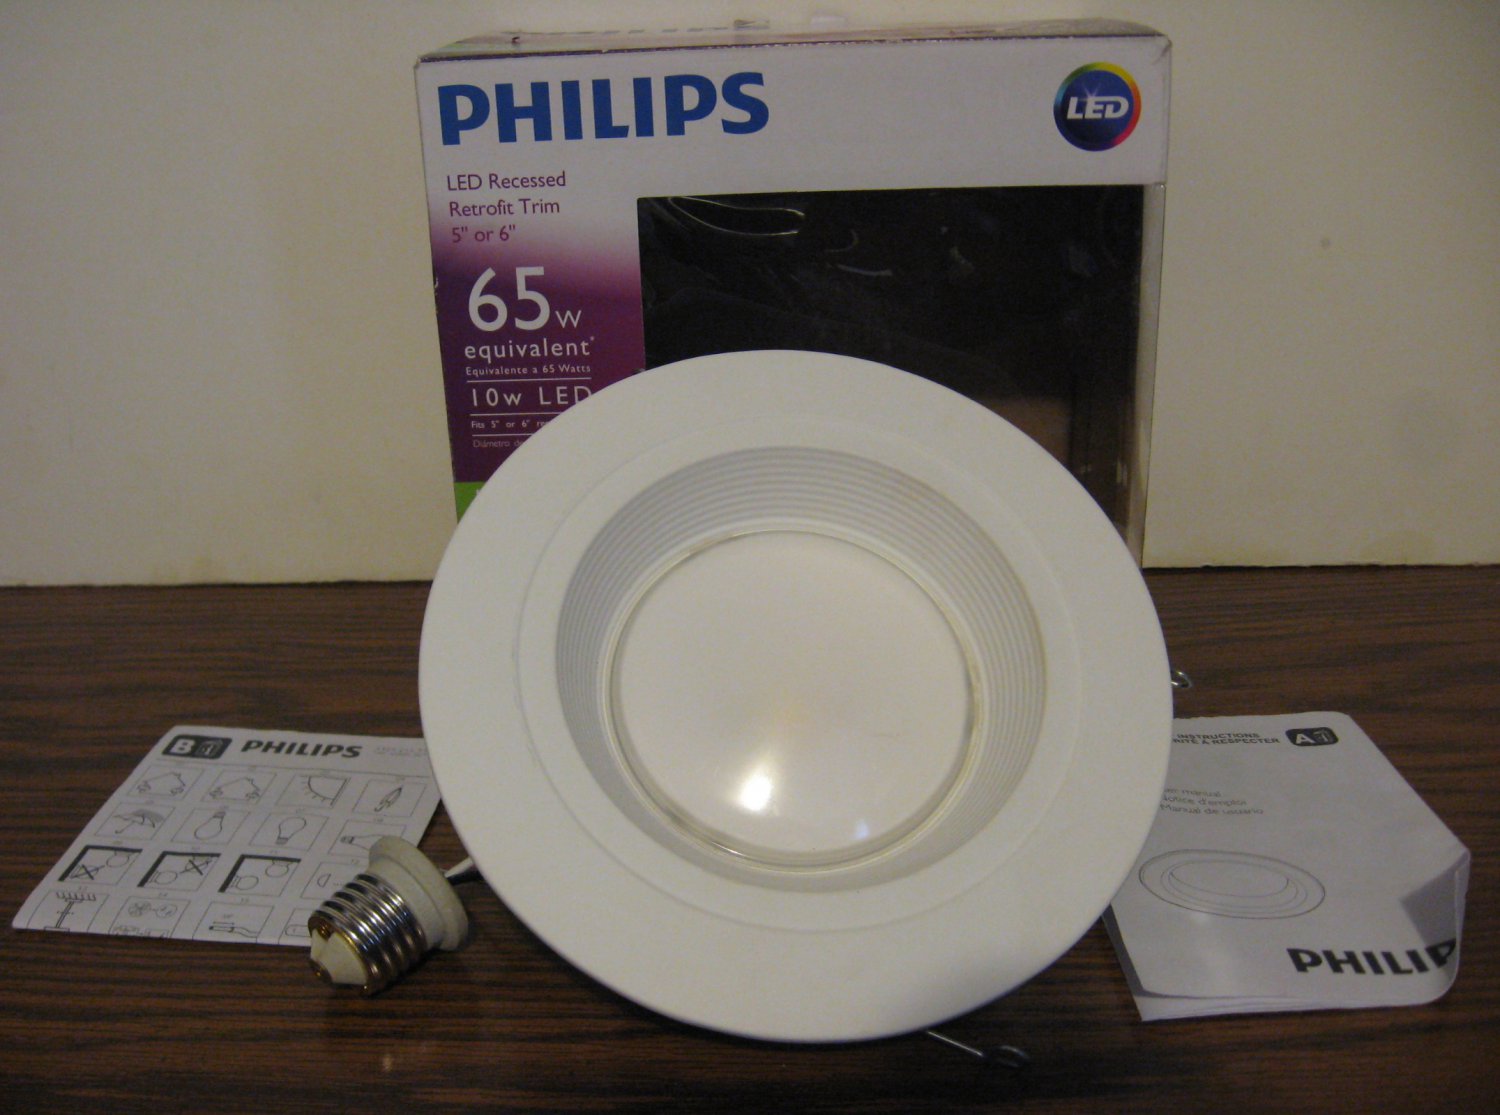 Philips LED Recessed Retrofit Trim Light 5" / 6" 10w / 65w Open Box Status Unknown